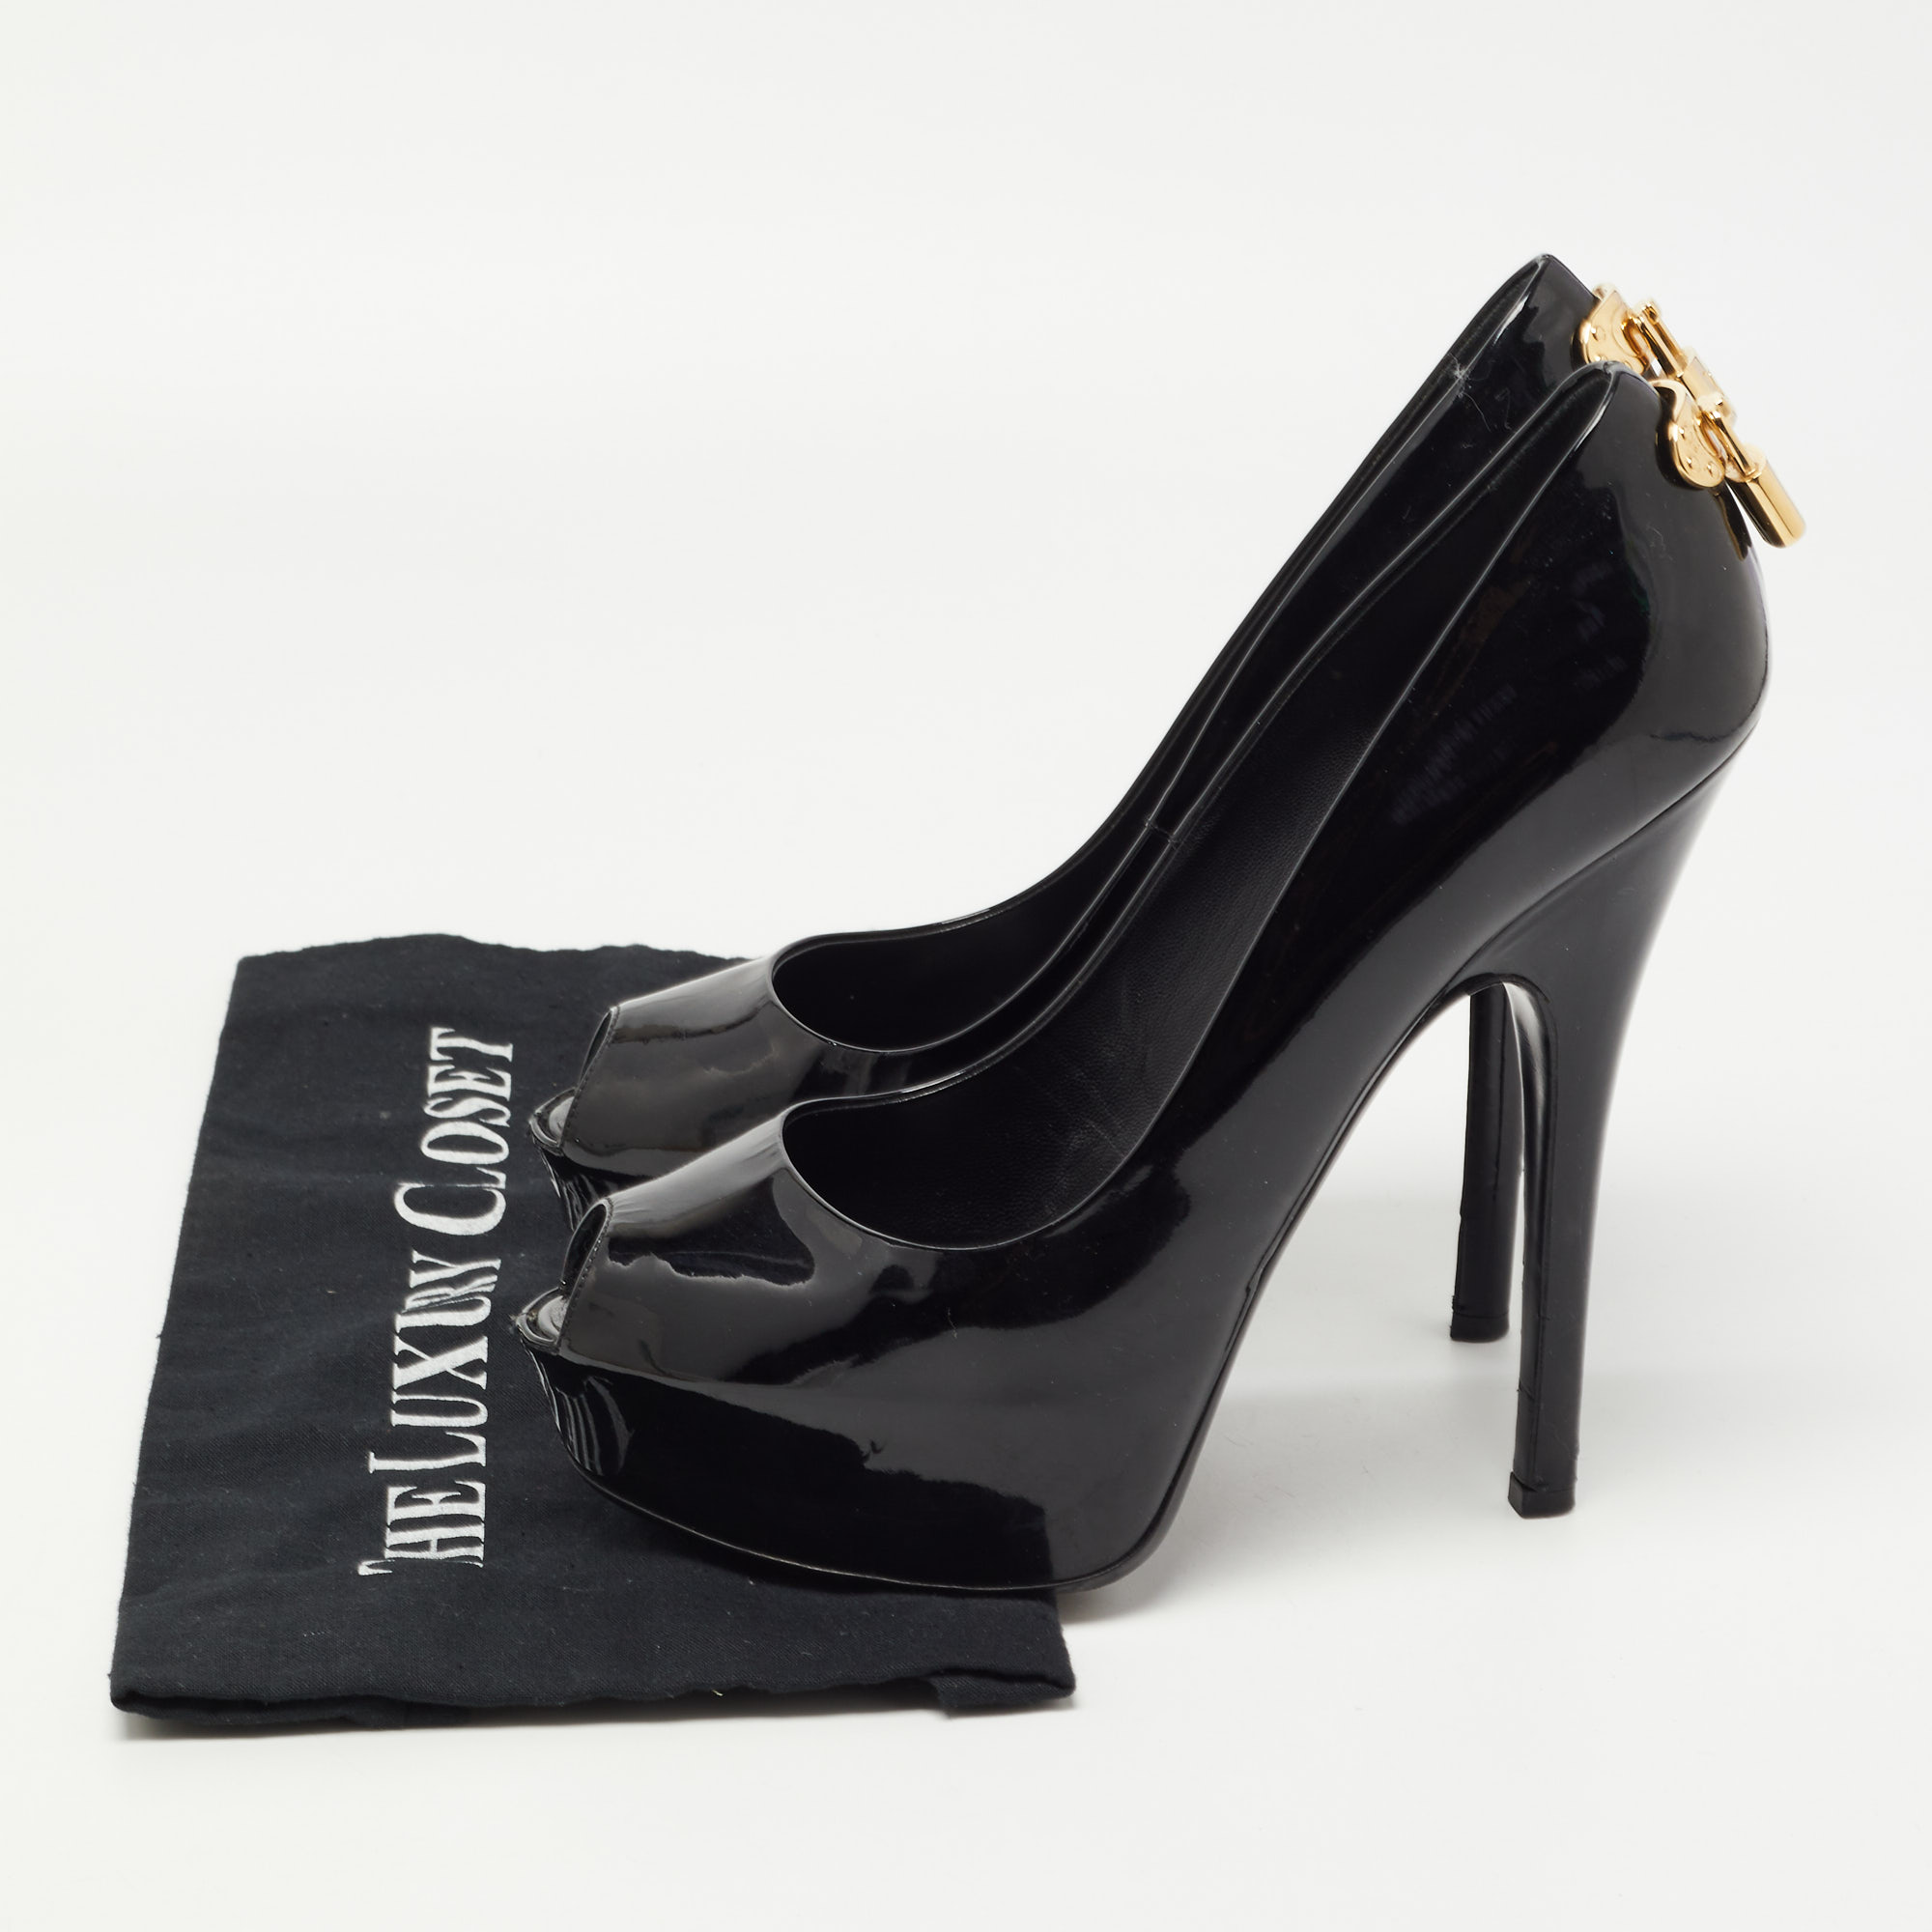 Louis Vuitton Black Patent Leather Oh Really! Platform Peep Toe Pumps Size 39.5